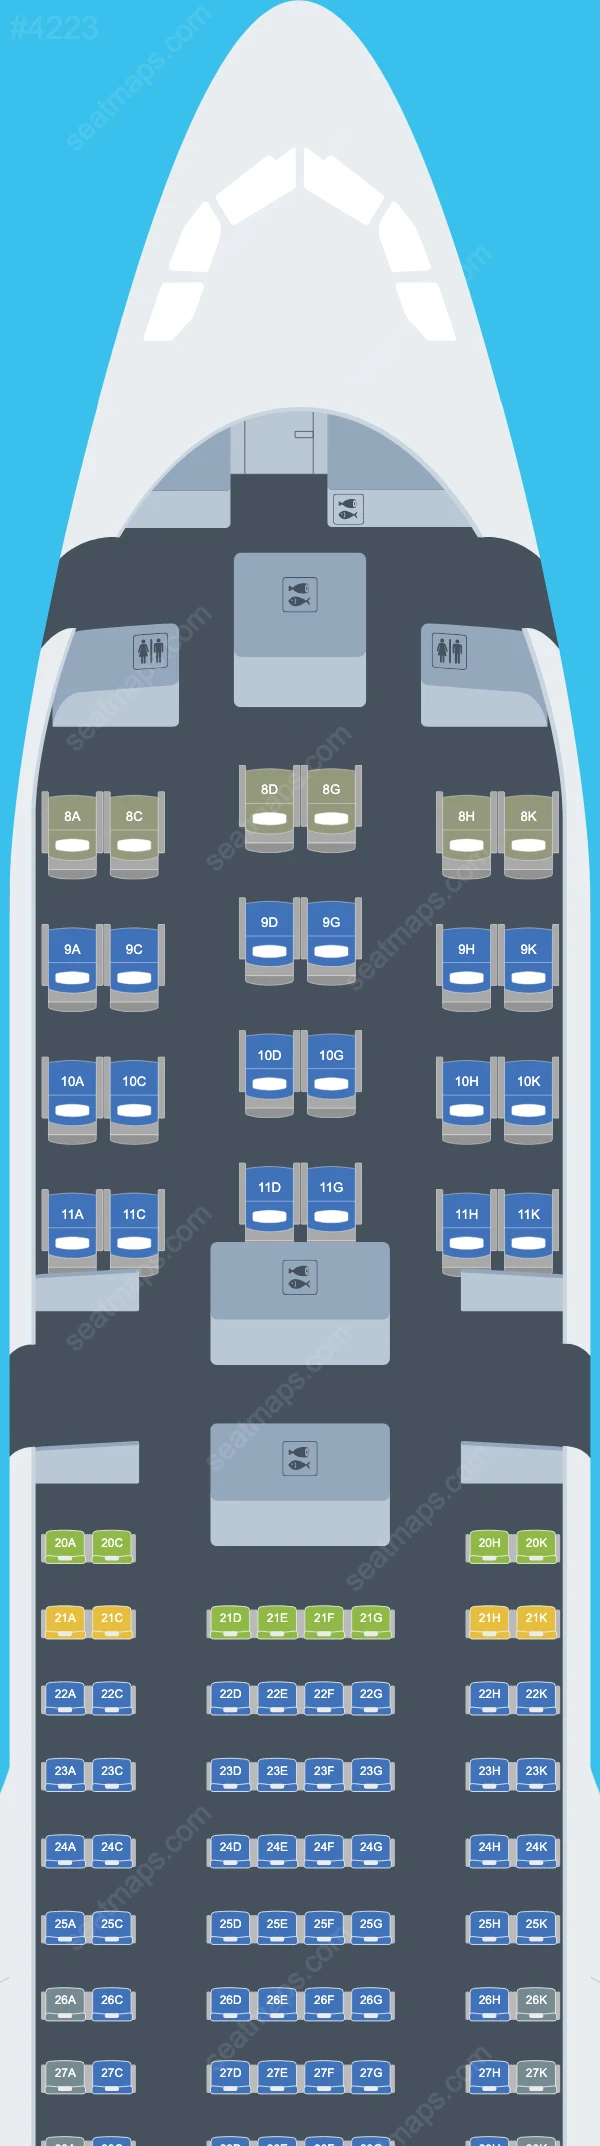 Egyptair Airbus A330 Seat Maps A330-200